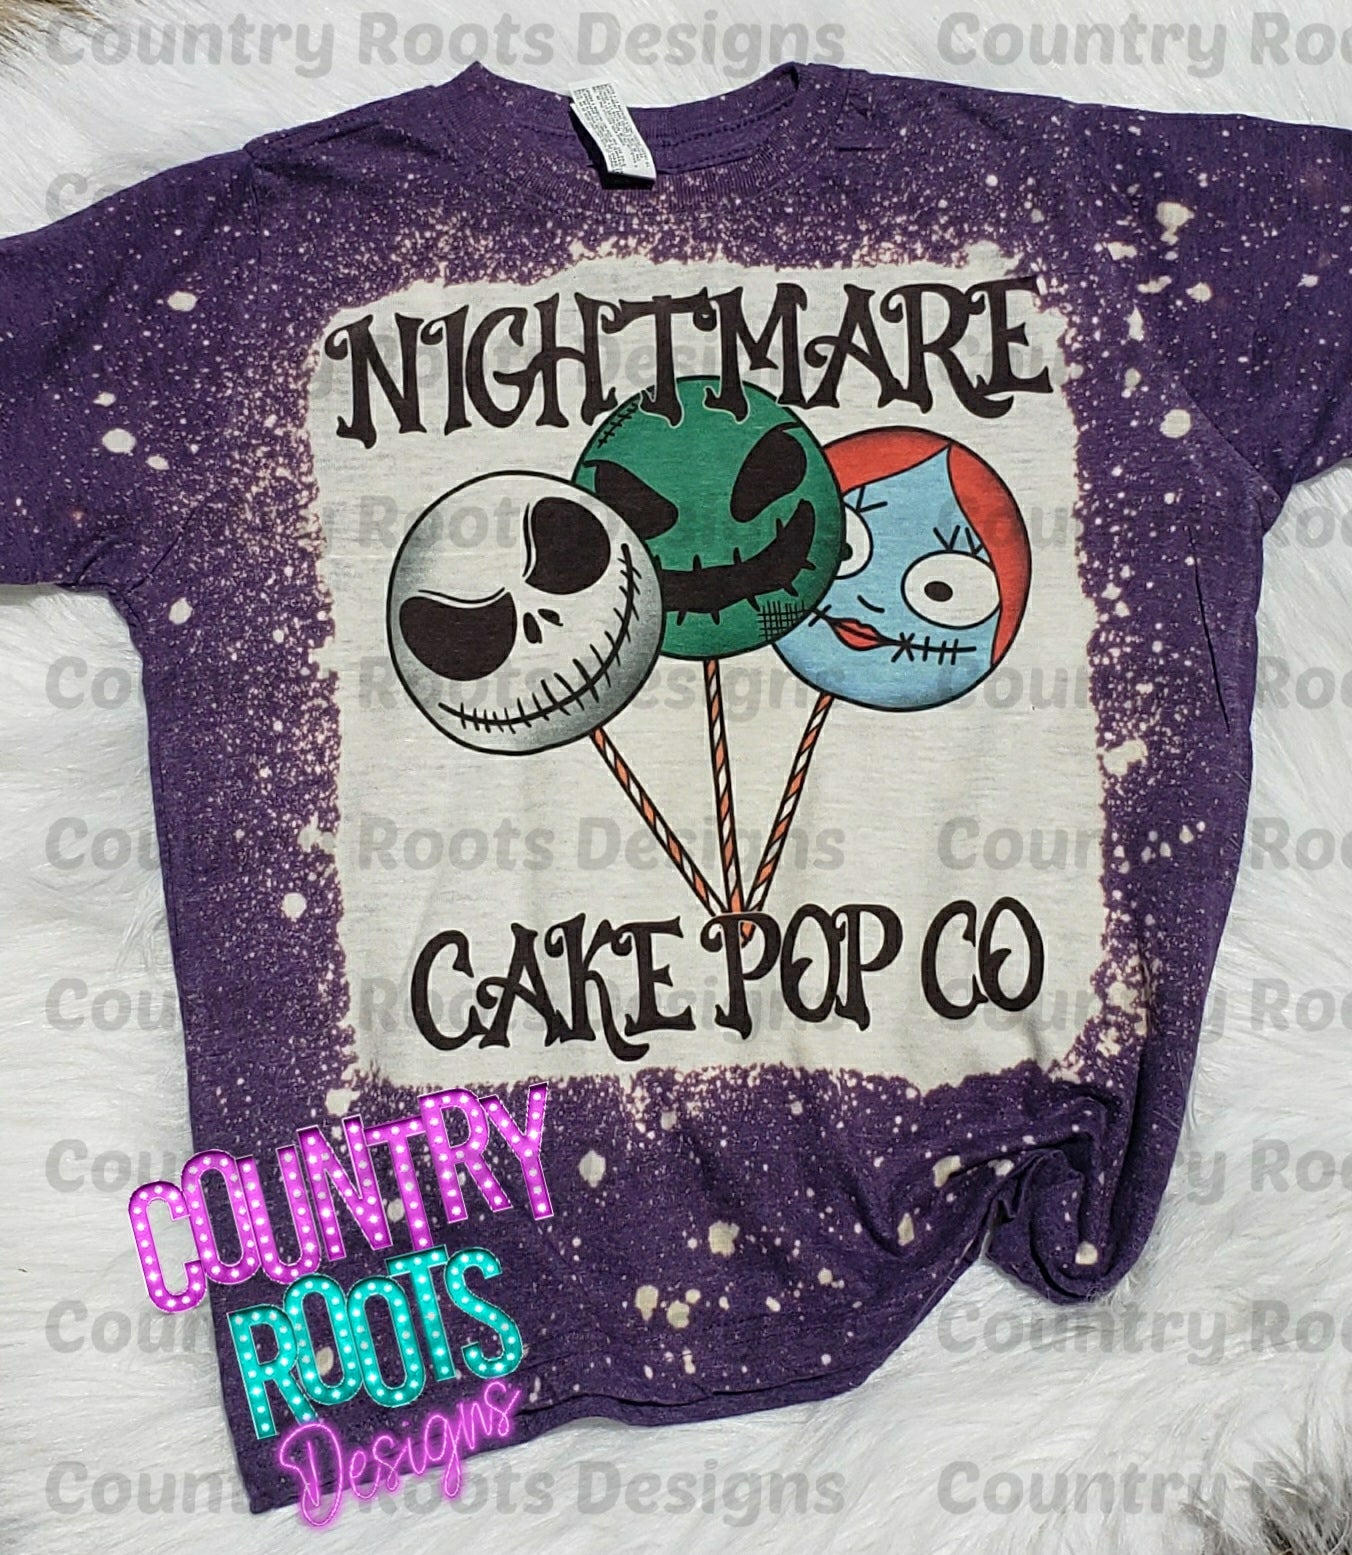 Nightmare Cake Pop Co.